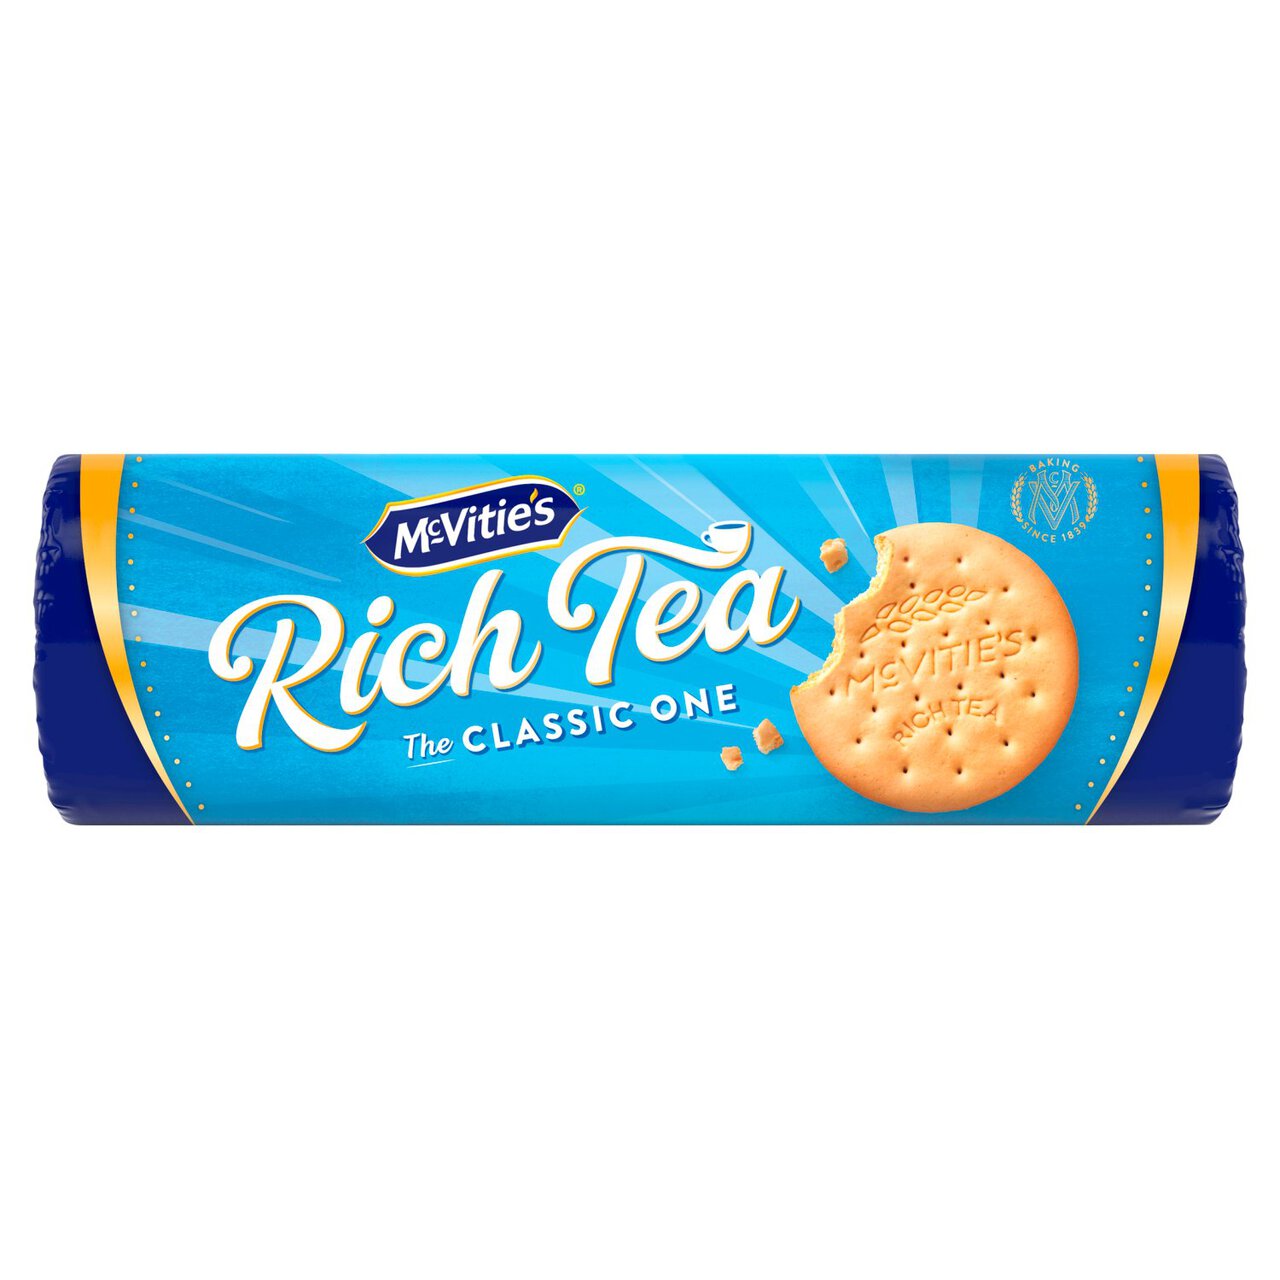 McVitie's Rich Tea Biscuits 300g